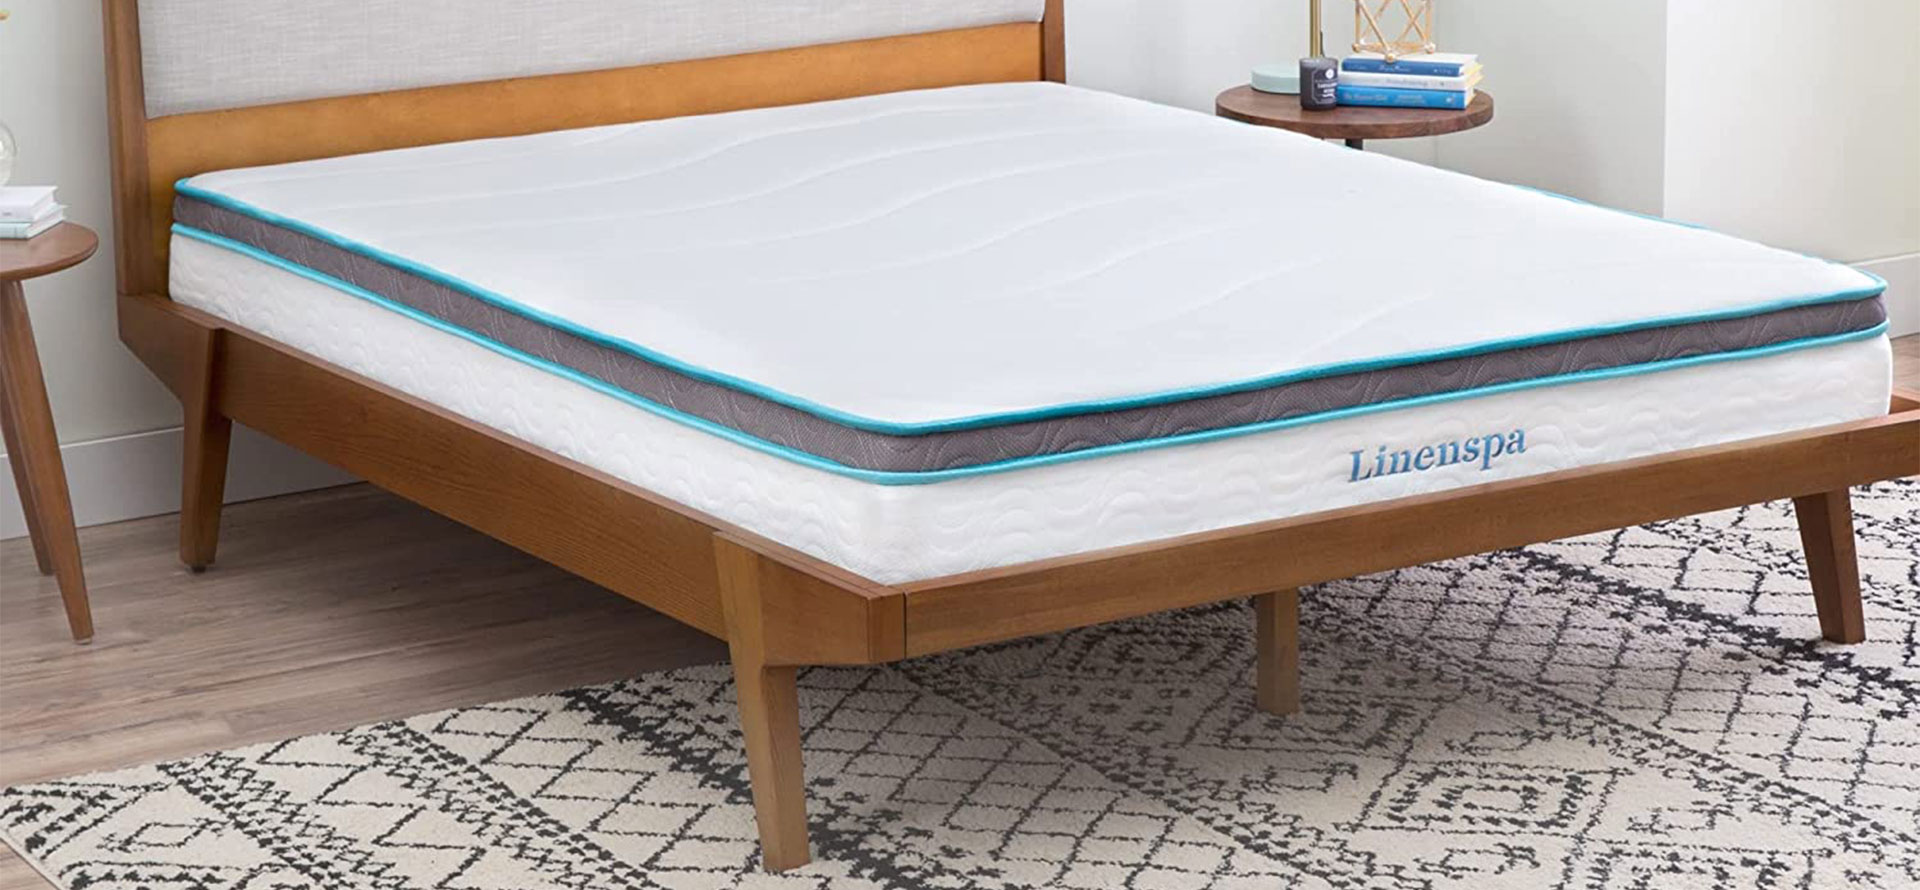 Linenspa mattress on bed.